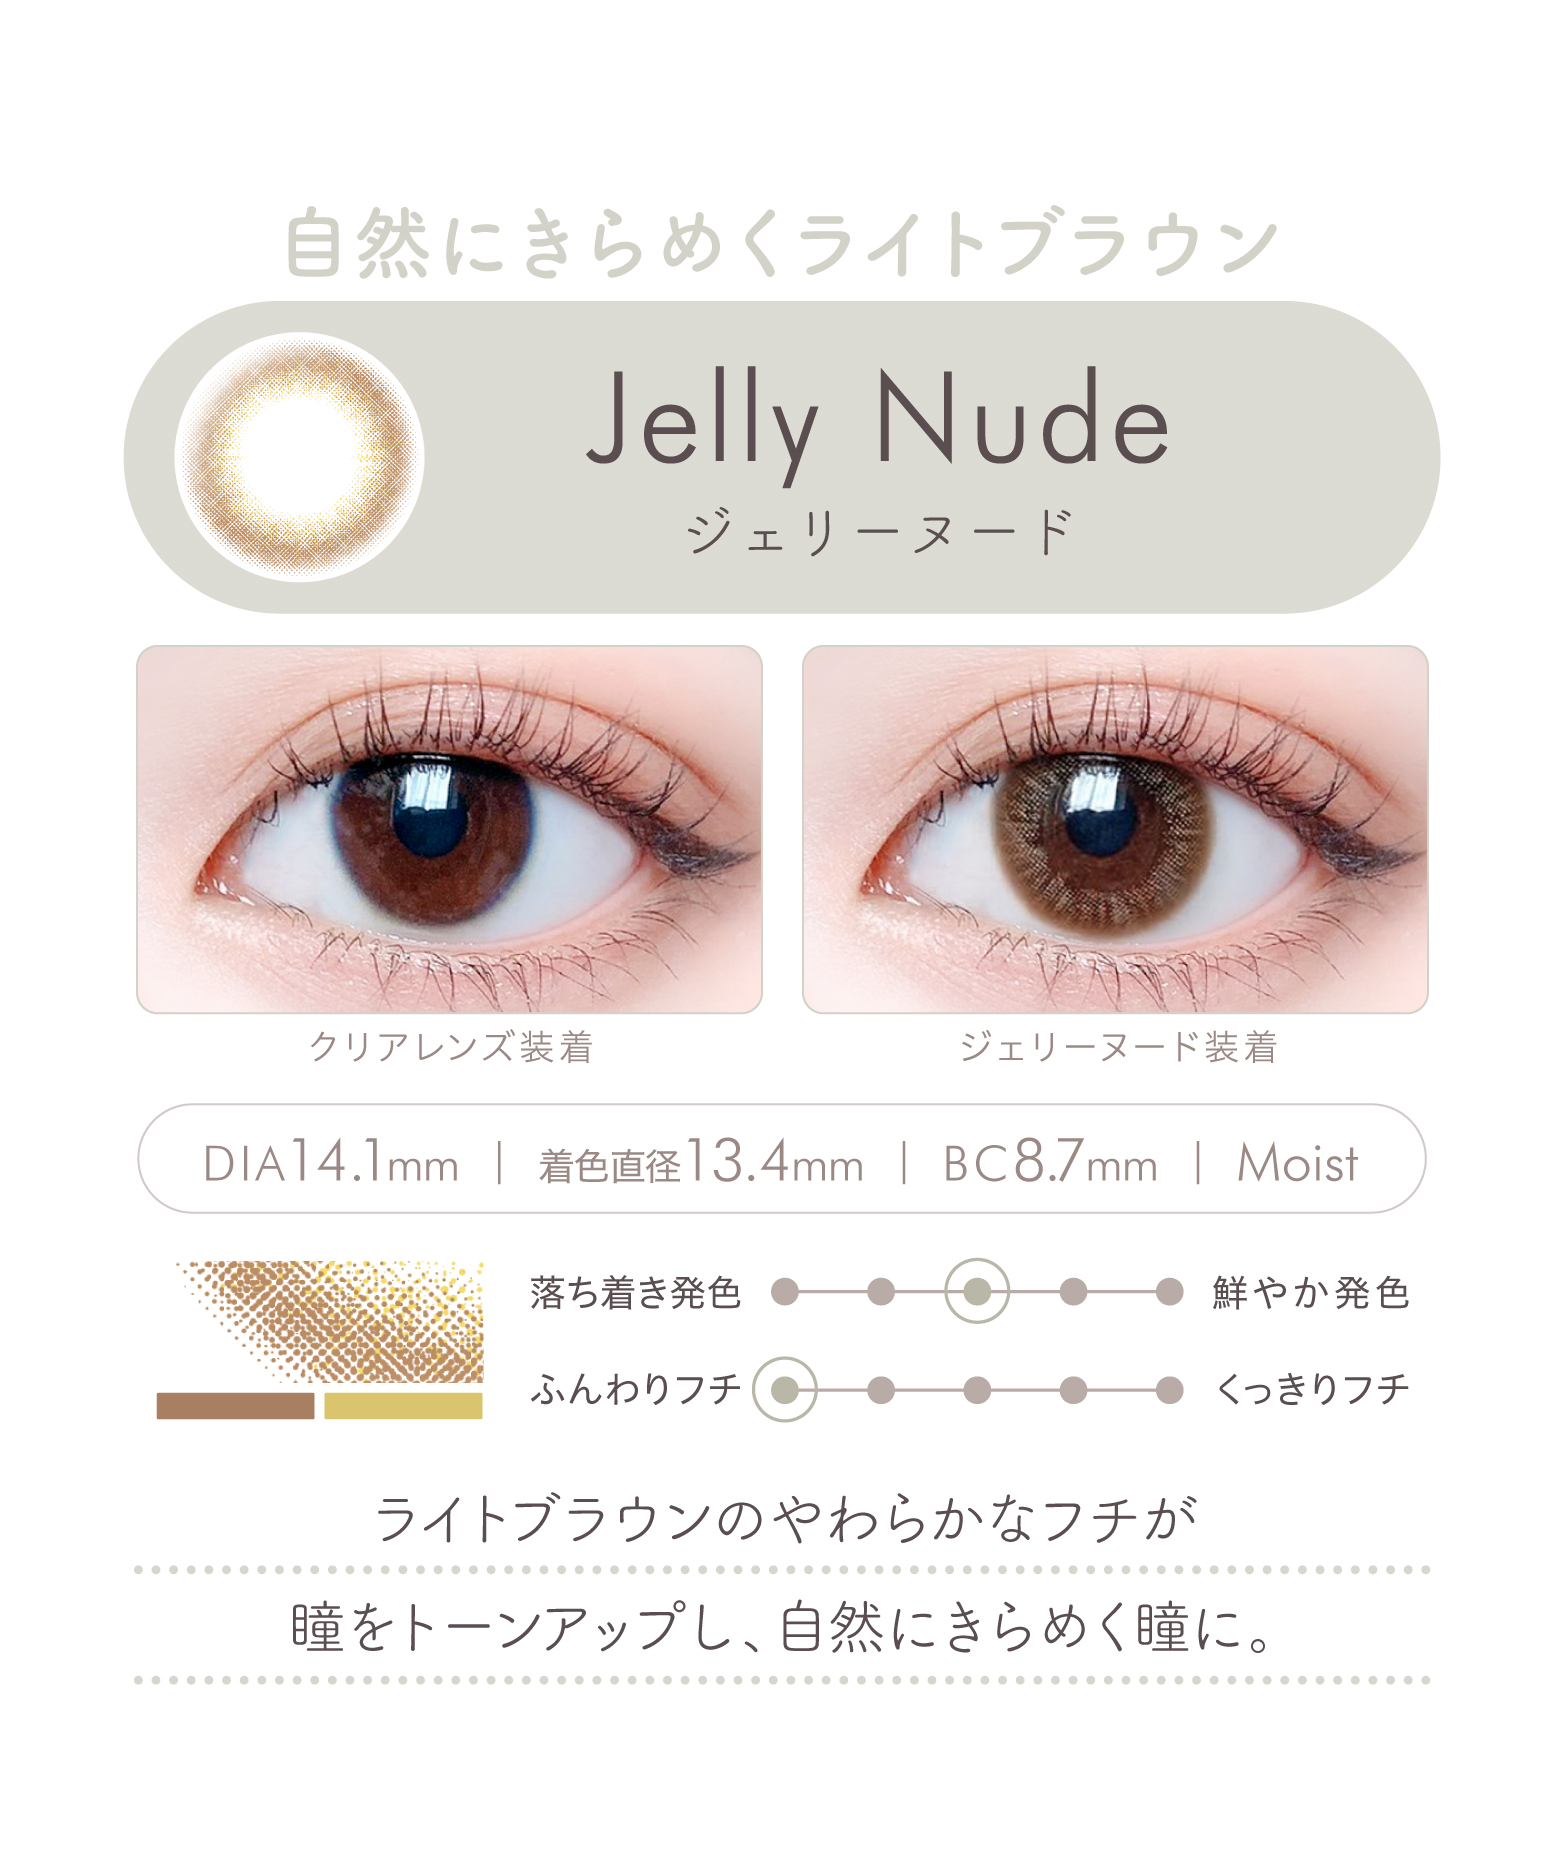 Jelly Nude